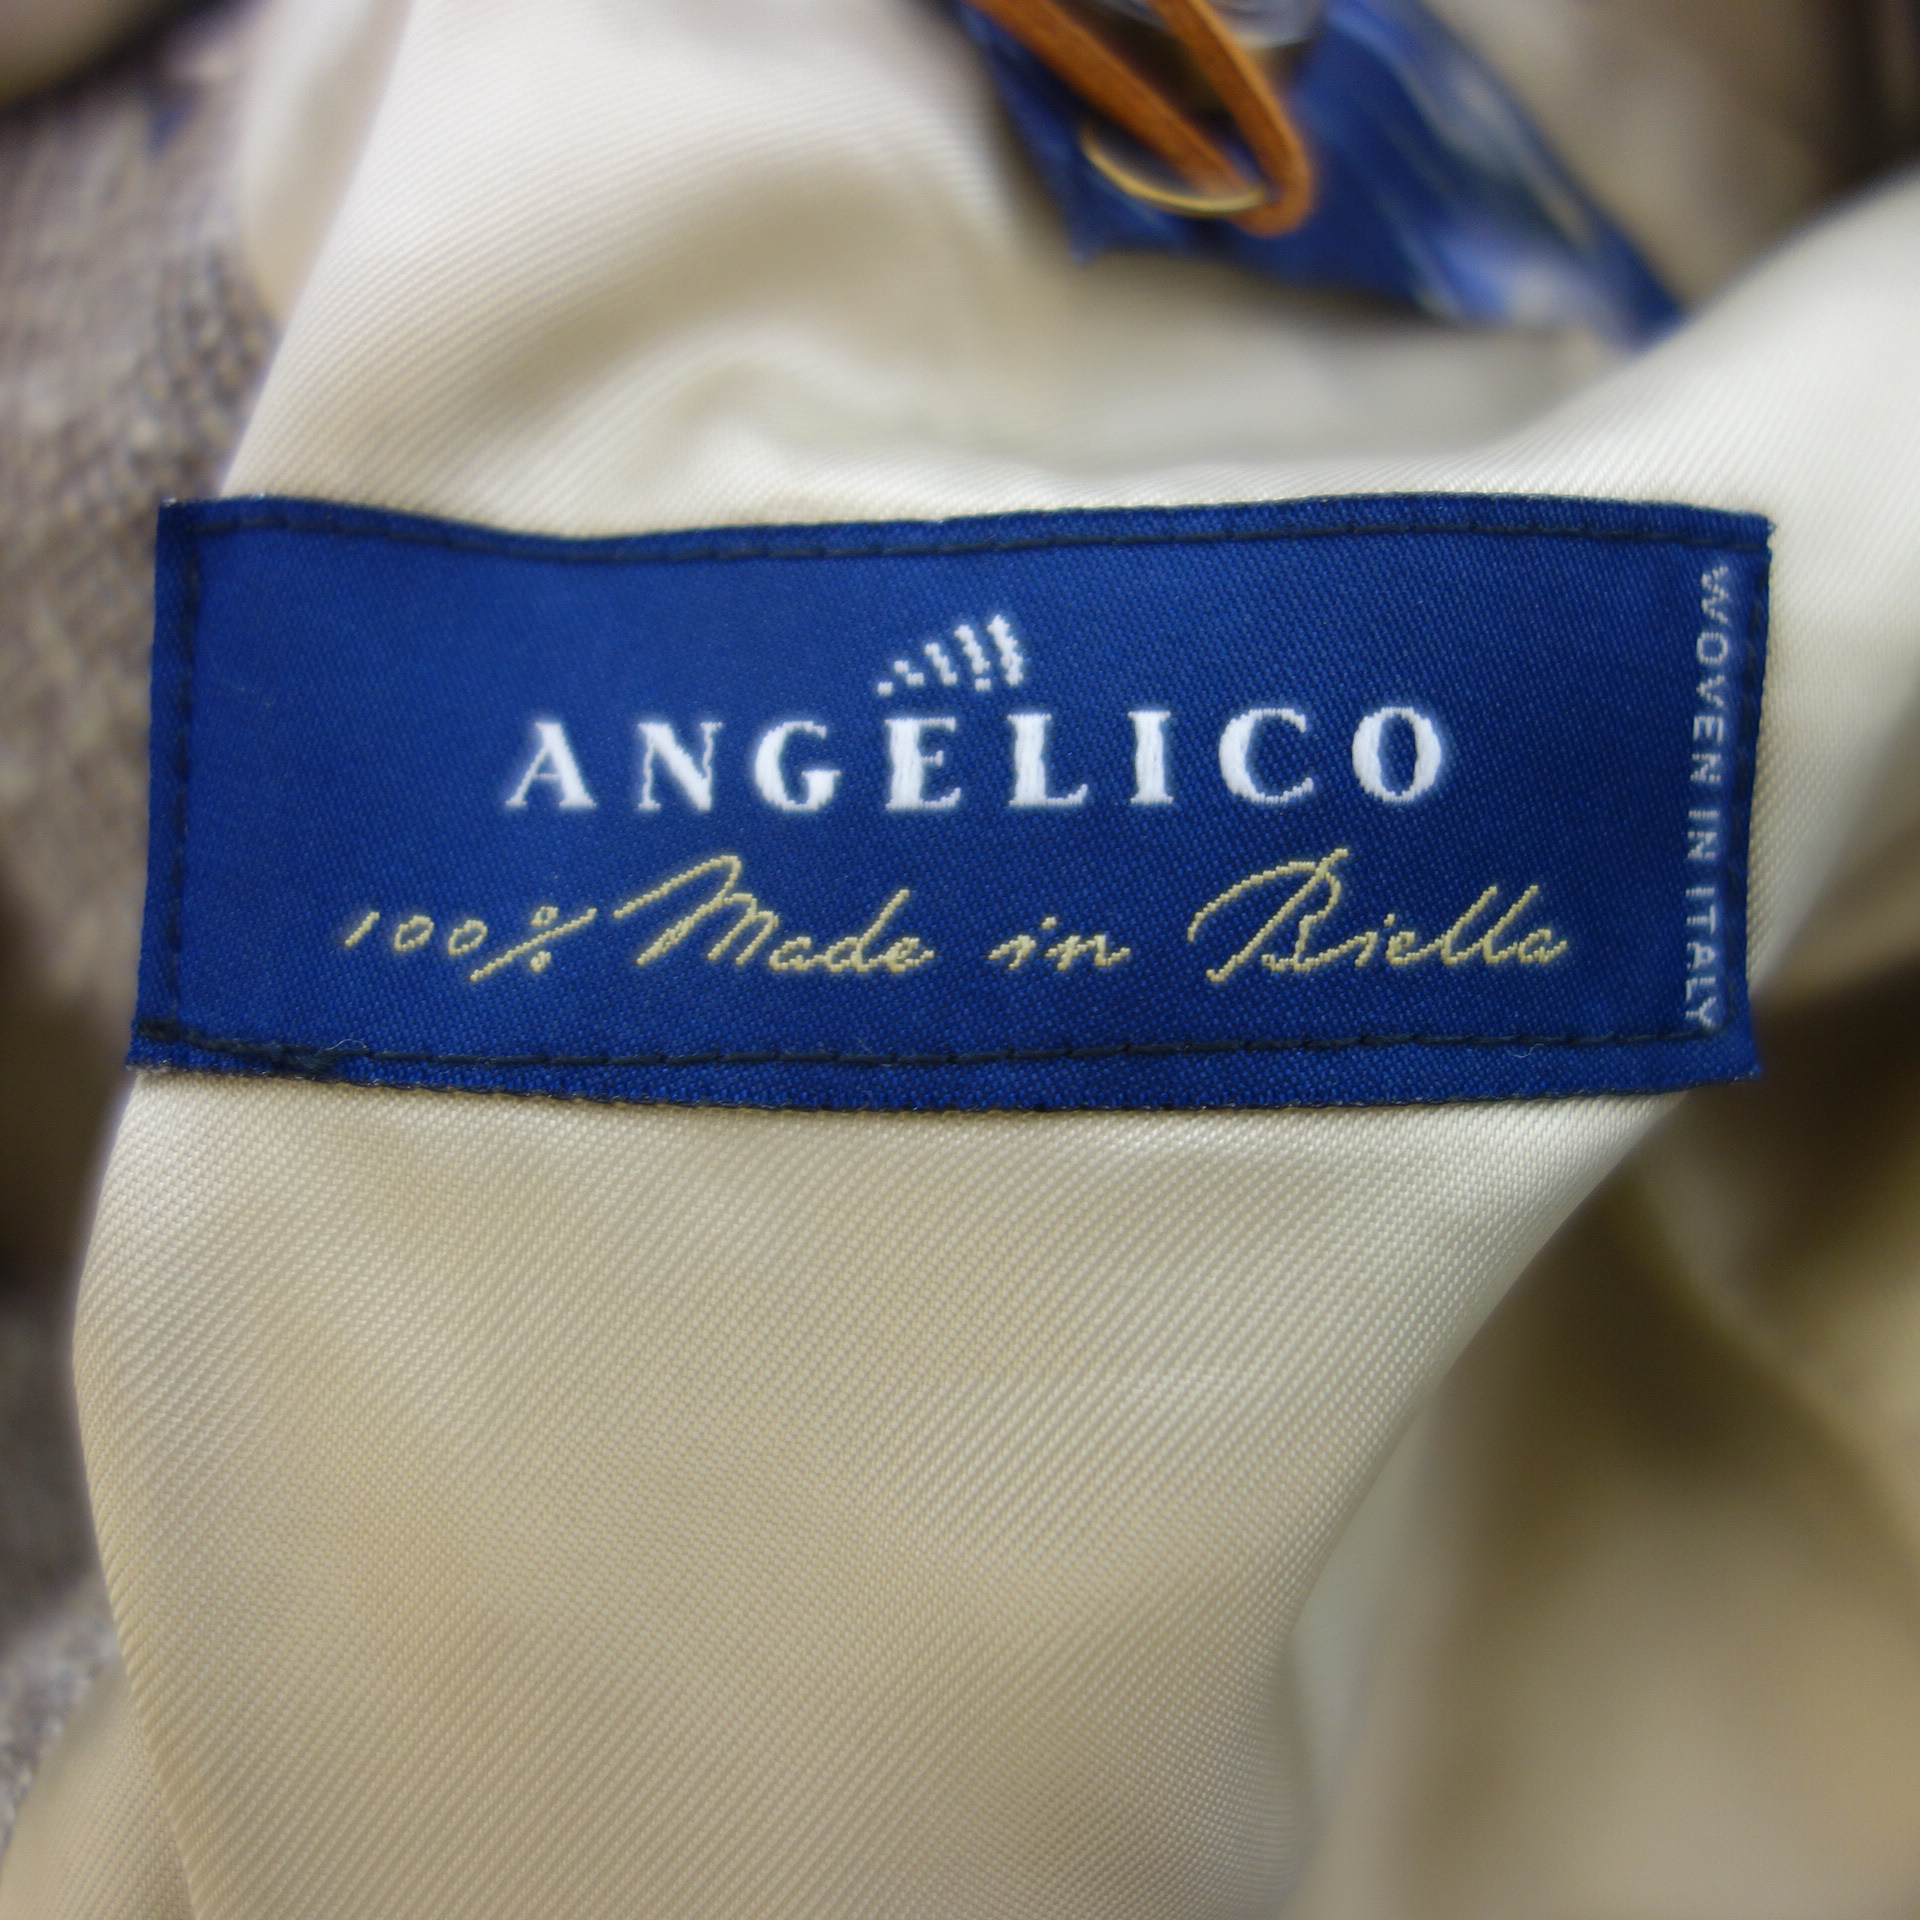 CIRCLE OF GENTLEMEN Angelico Herren Sakko Jacke Jacket Blazer Braun 54 Modell Abel